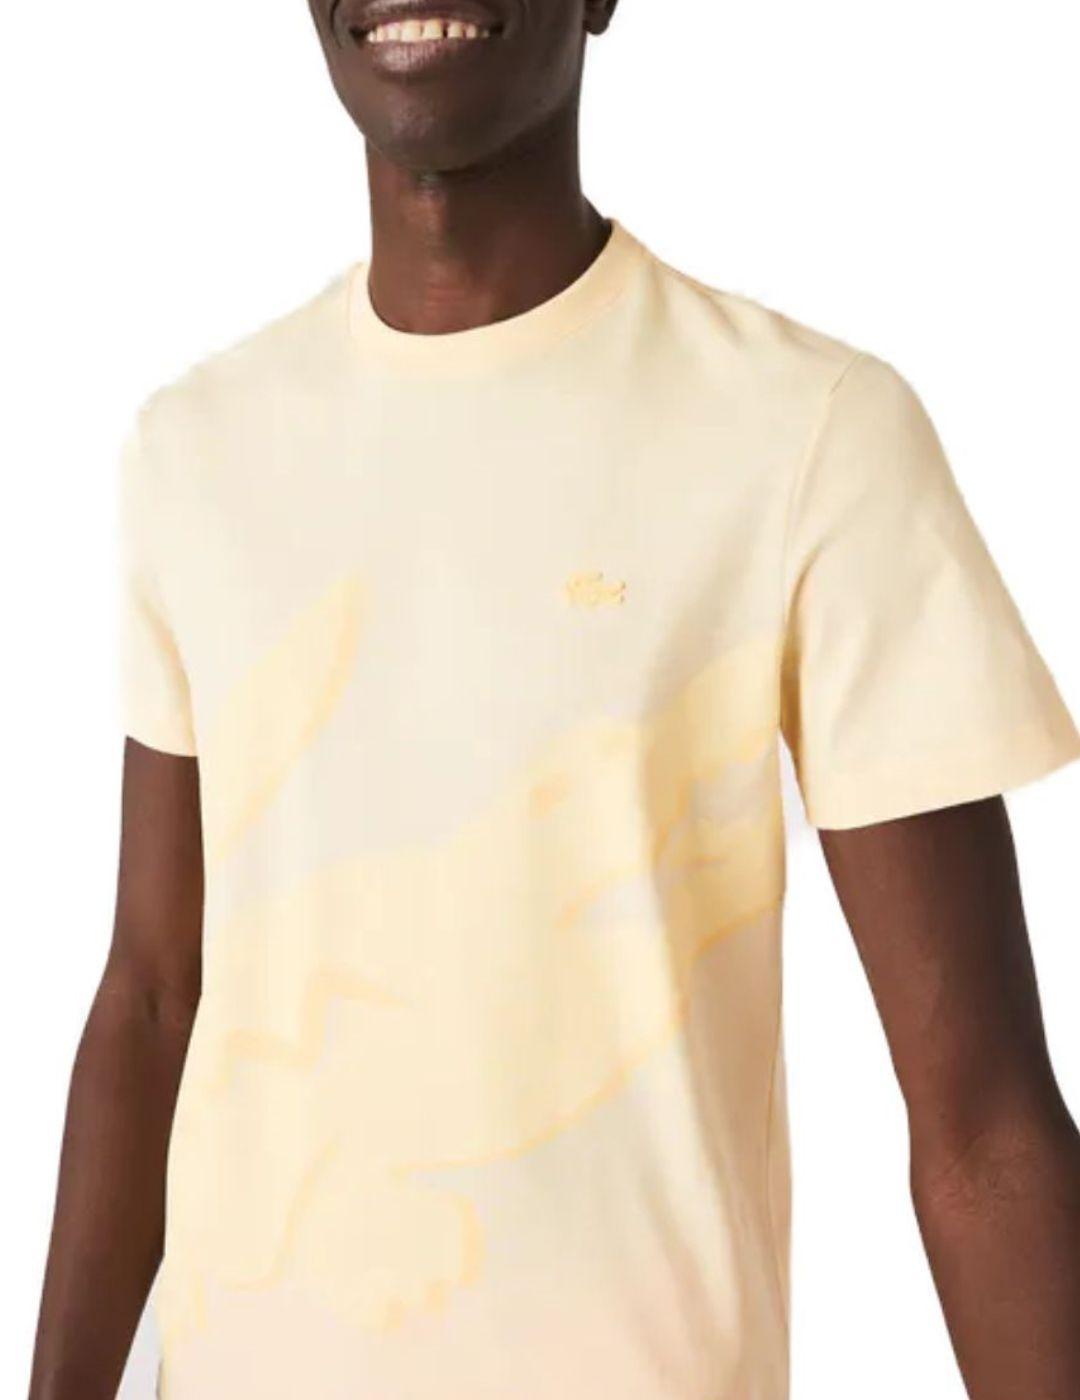 Gruñón Susteen Seguro Camiseta Lacoste amarilla logo maxi para hombre-a